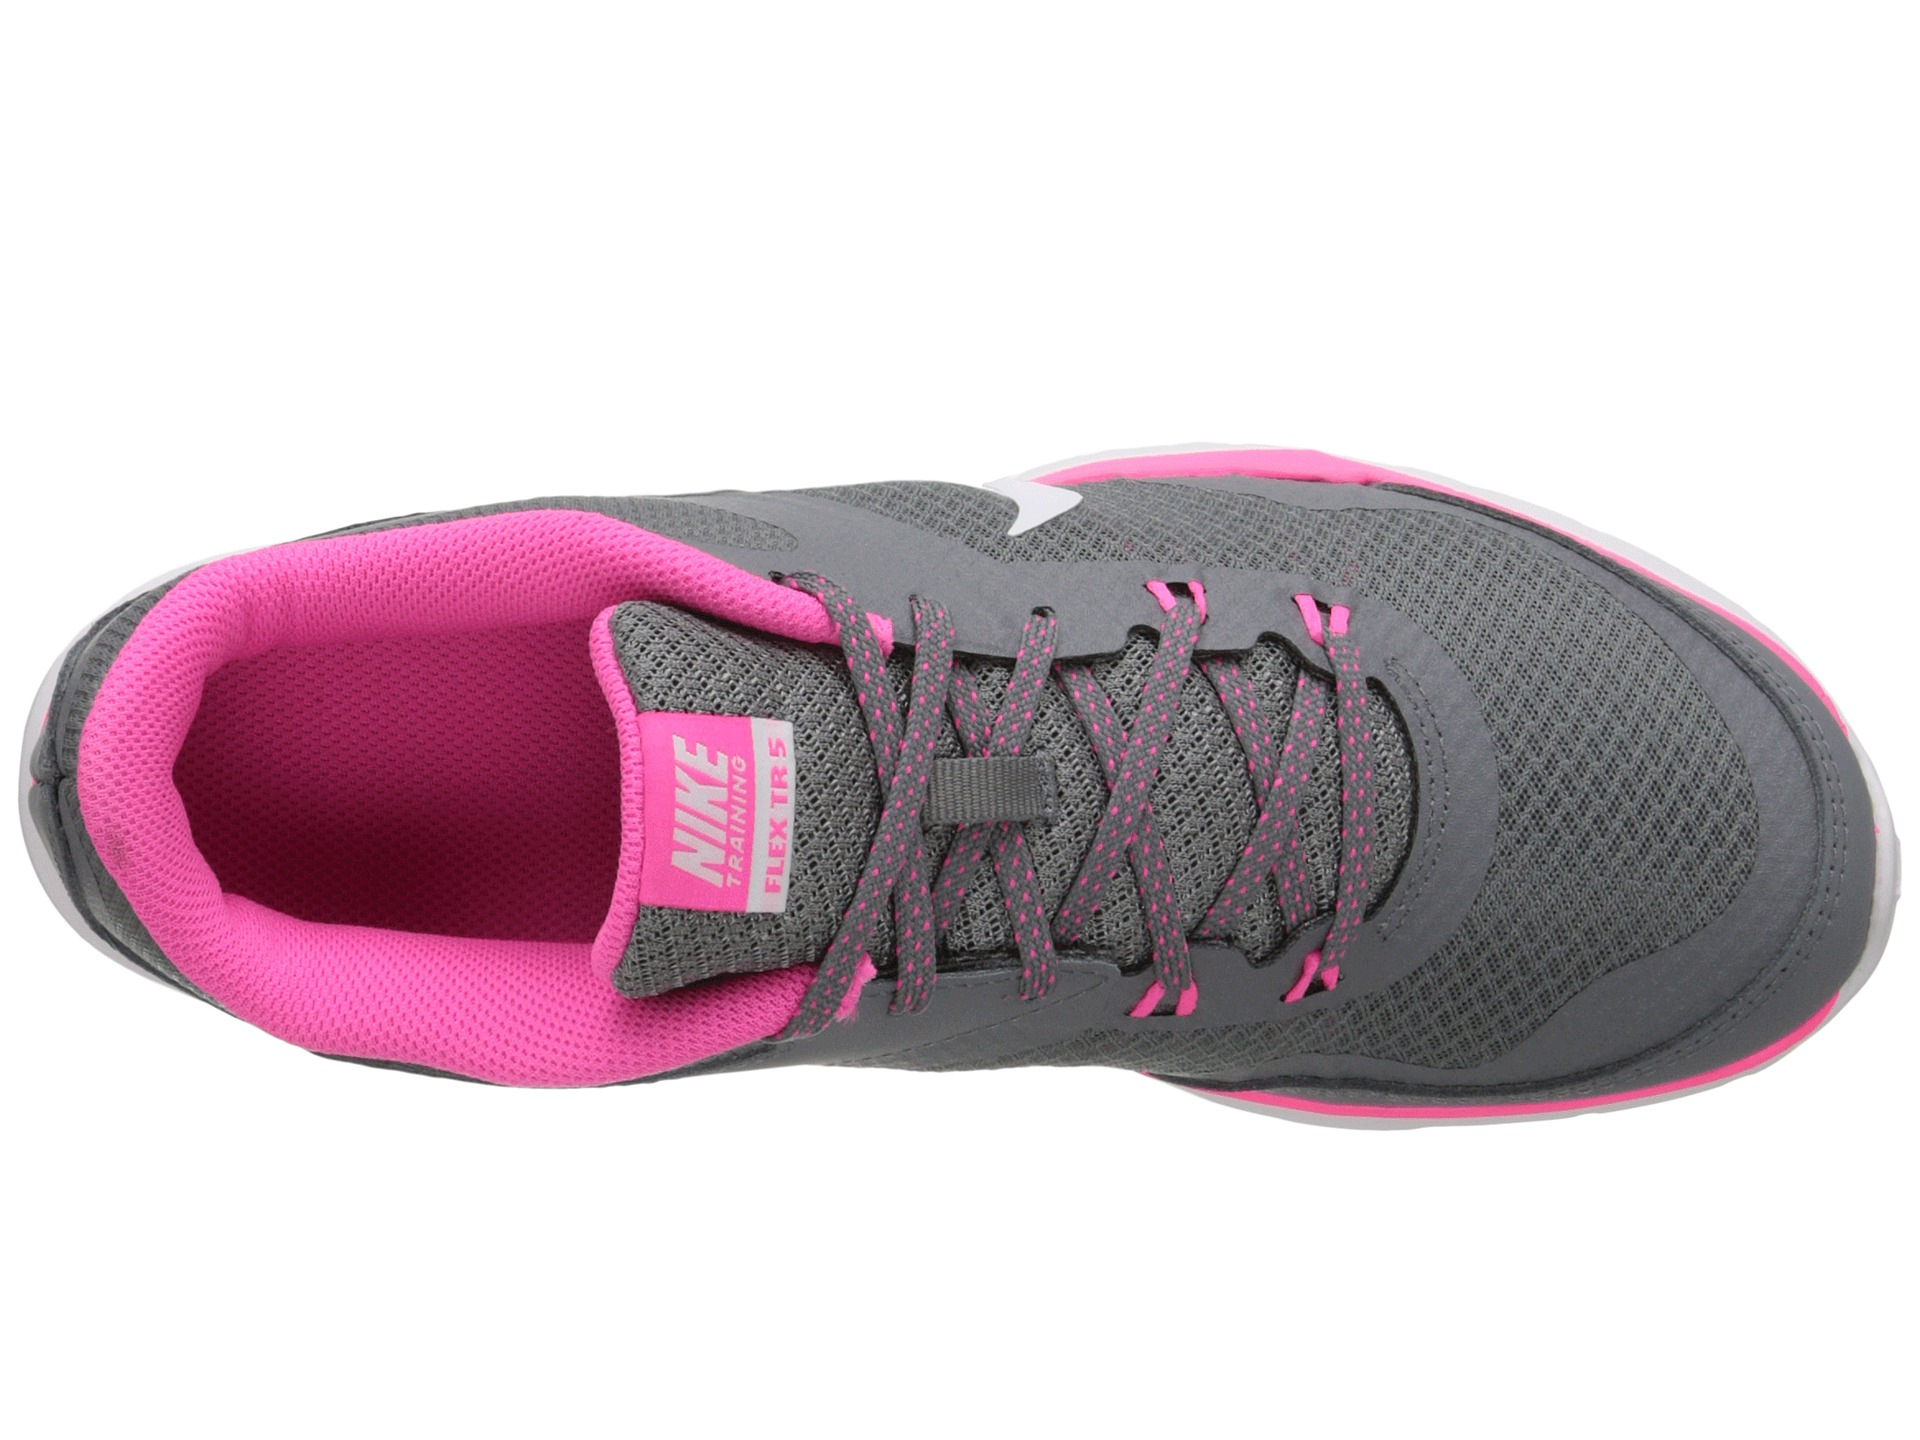 Lyst - Nike Flex Trainer 5 in Pink